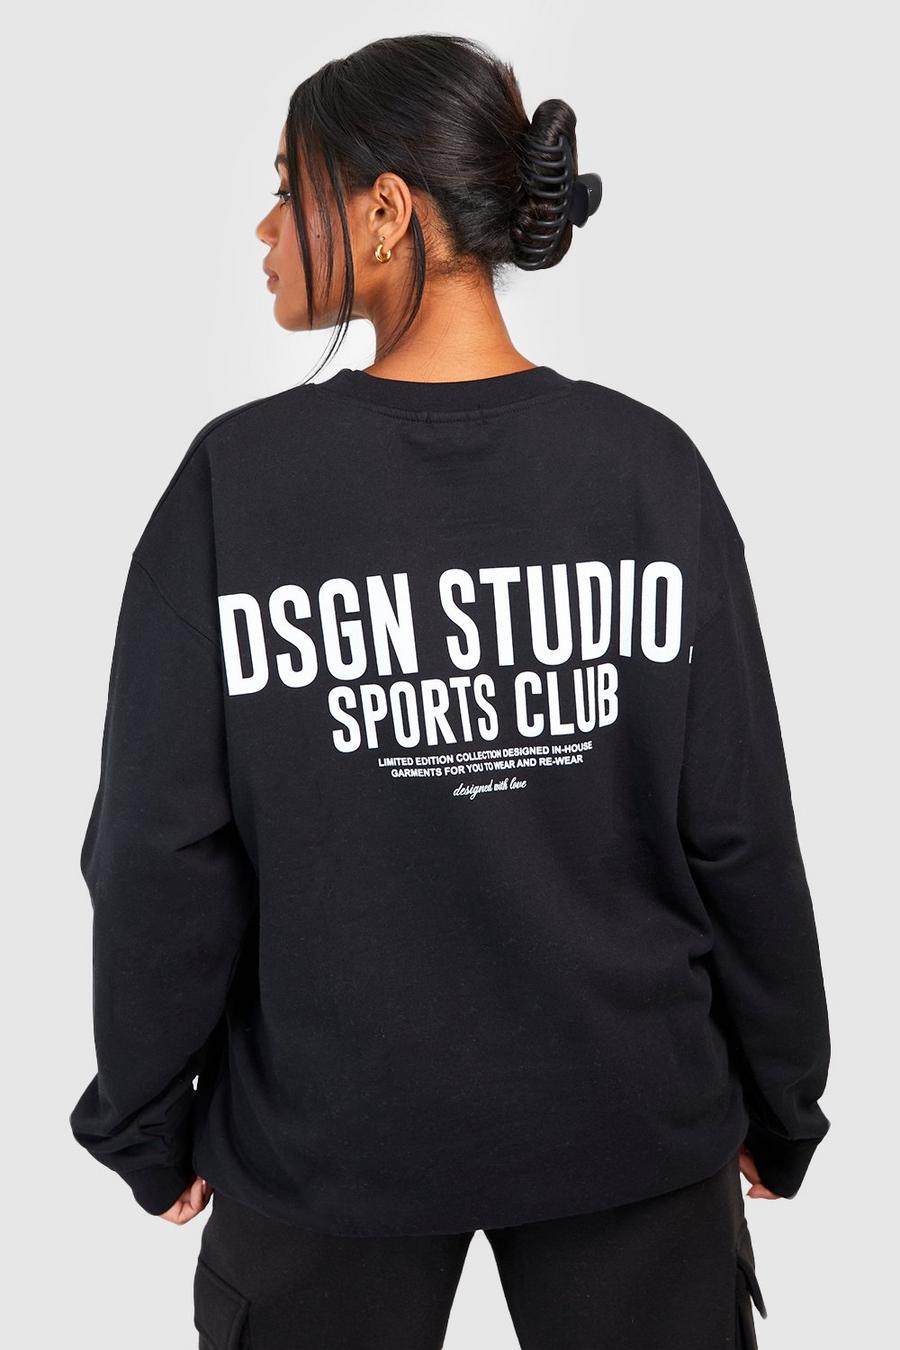 Oversize Sweatshirt mit Dsgn Studio Sports Club Slogan, Black